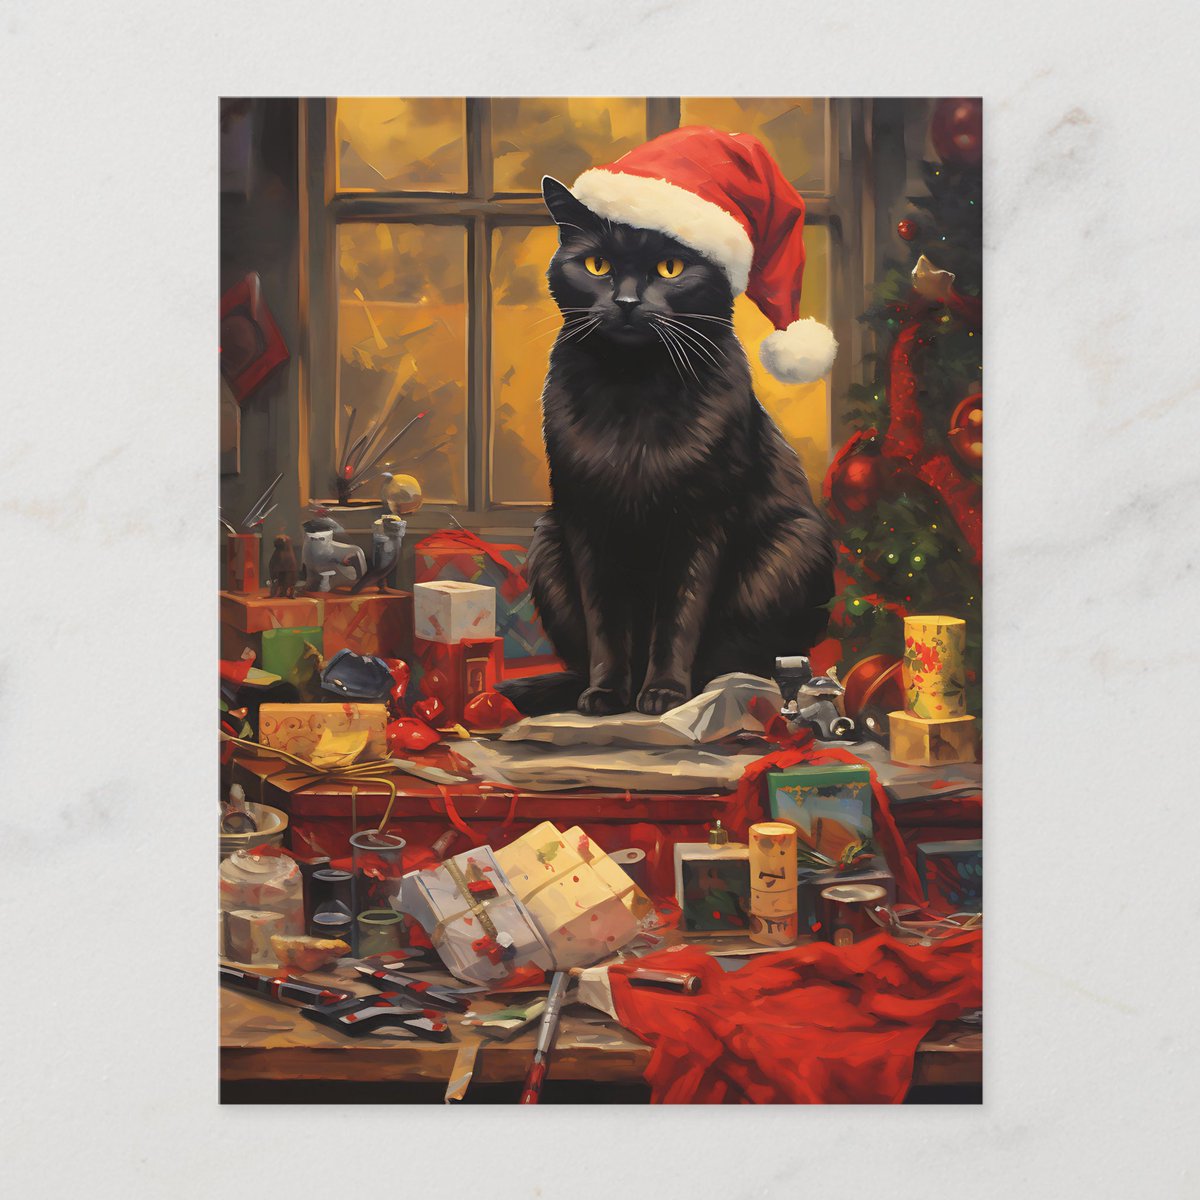 Black Cat With Santa Hat Art Scene Christmas Holiday Postcard zazzle.com/z/gzixsgvl?rf=… via @zazzle 

#postcard #Caturday #Christmas #ChristmasCard #christmascards #CatsOfTwitter #CatsLover